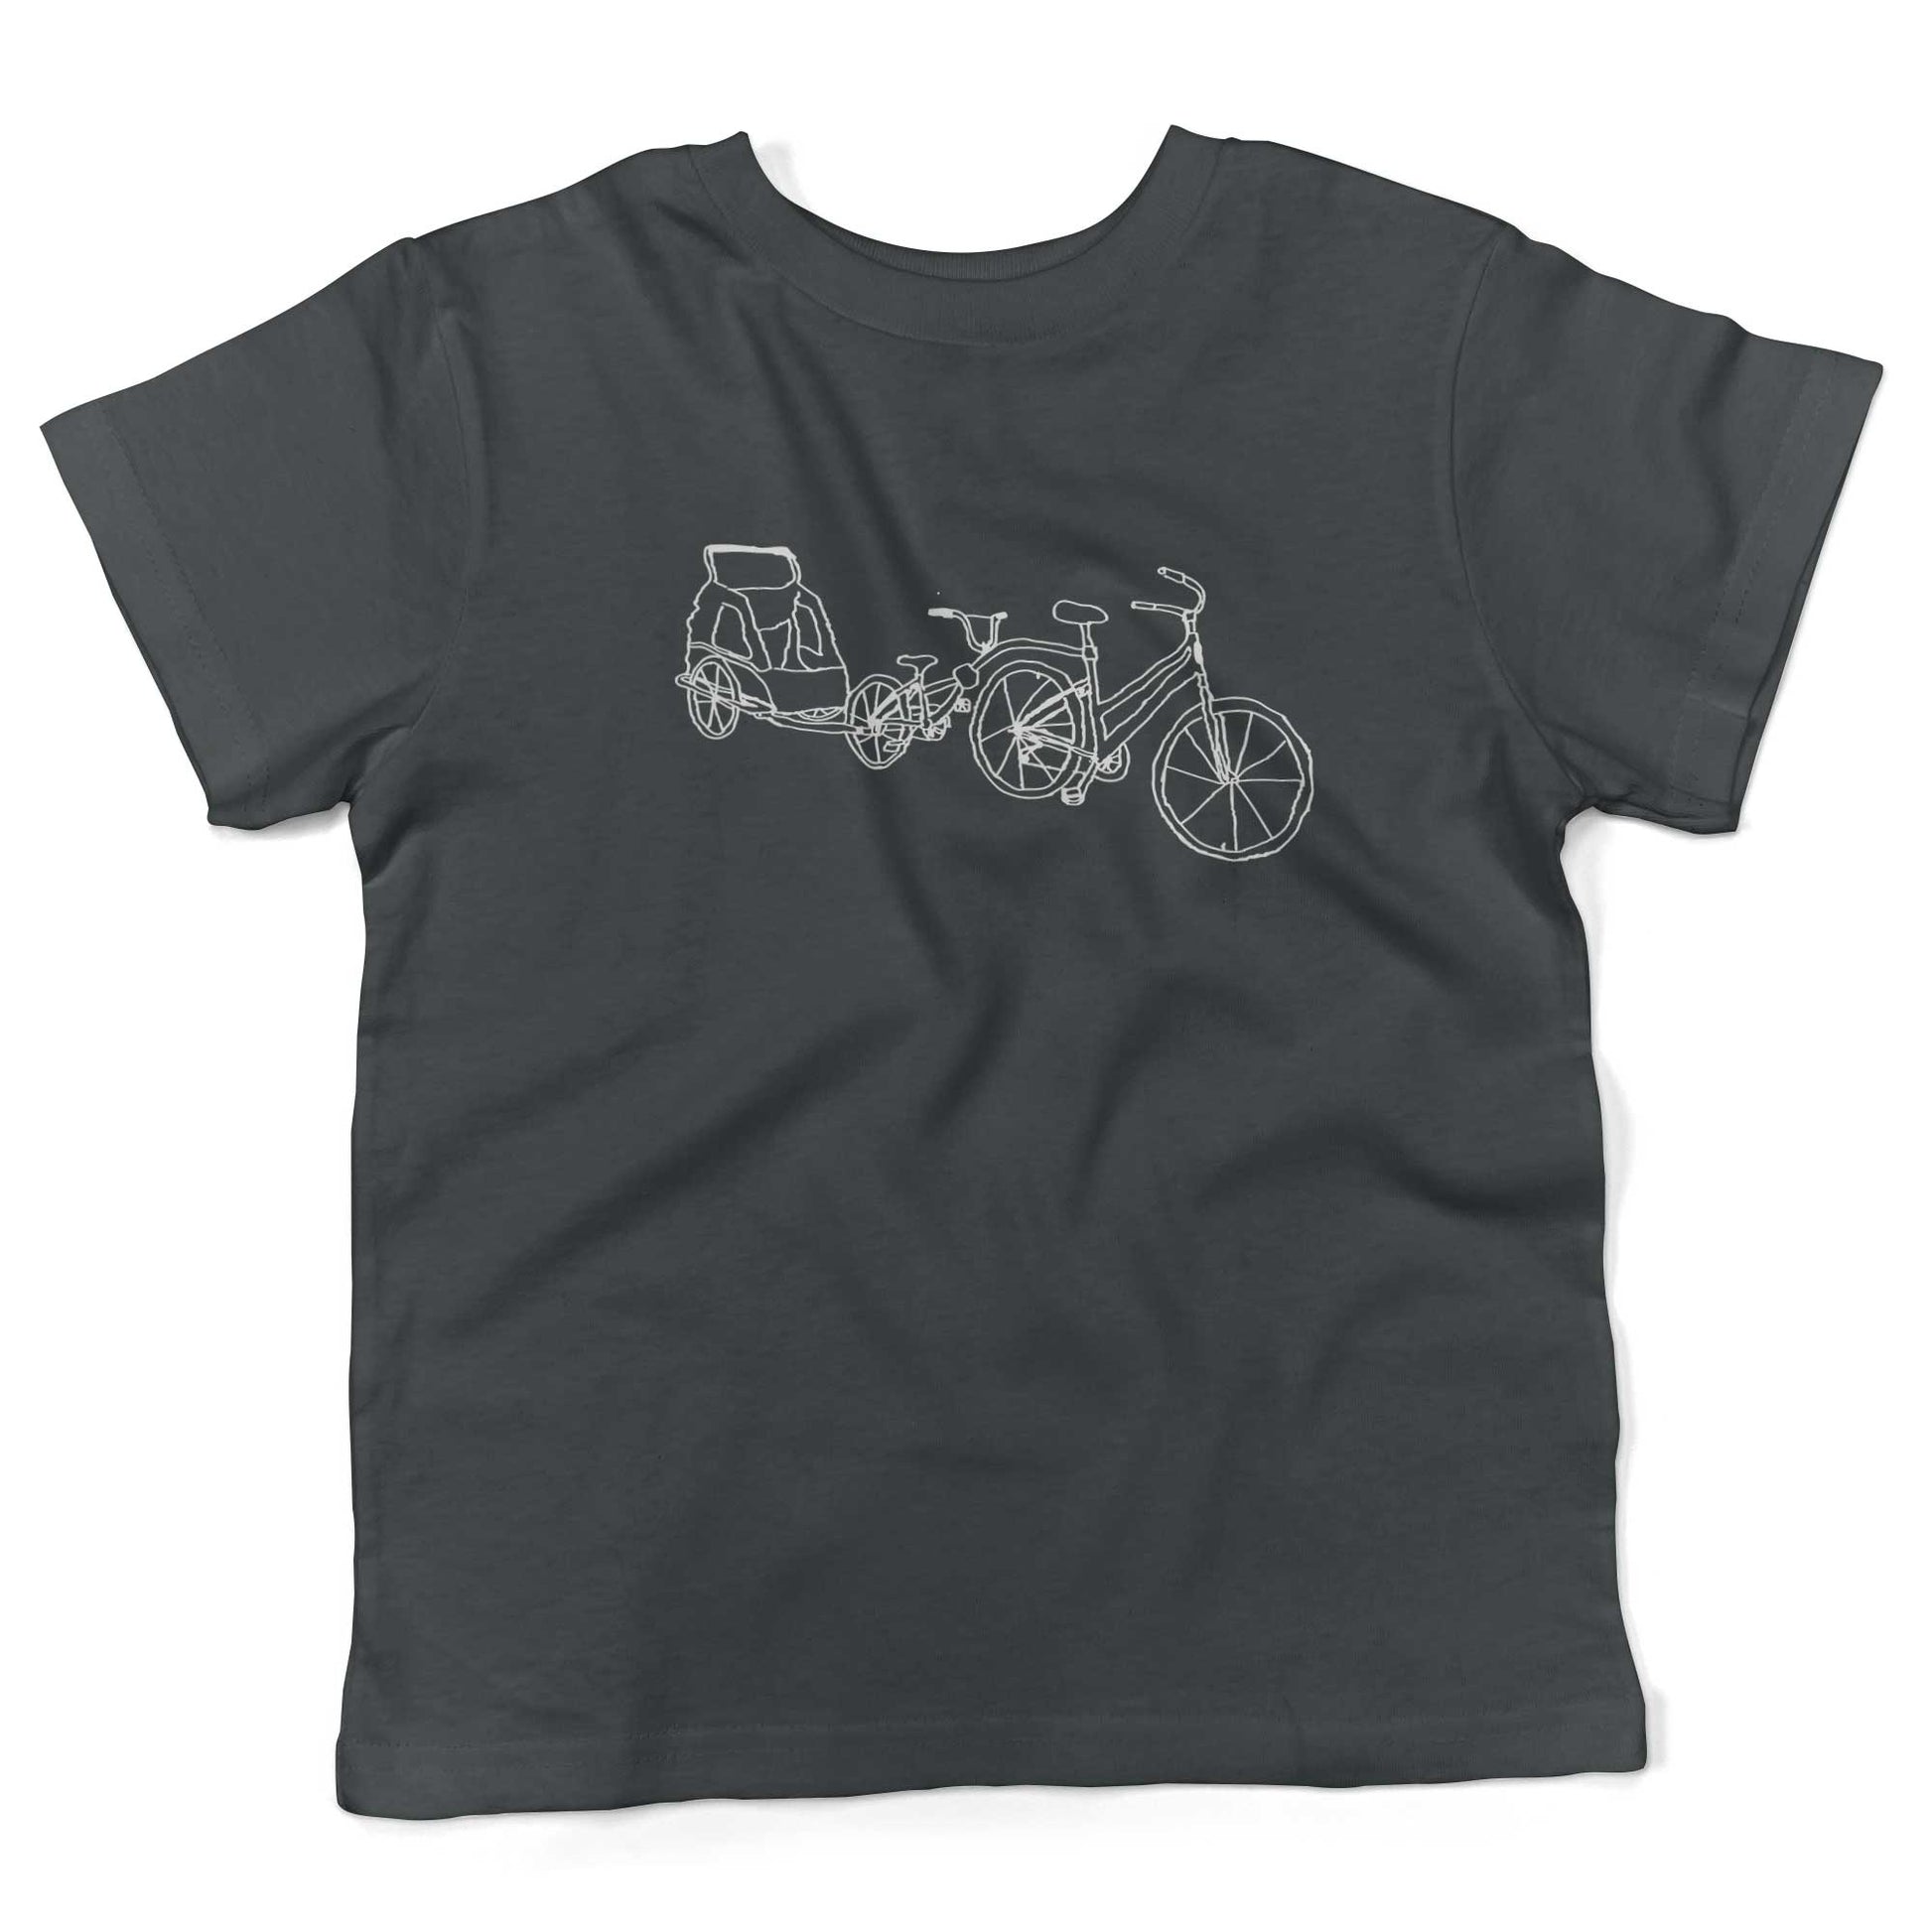 Family Bike Caravan Toddler Shirt-Asphalt-2T